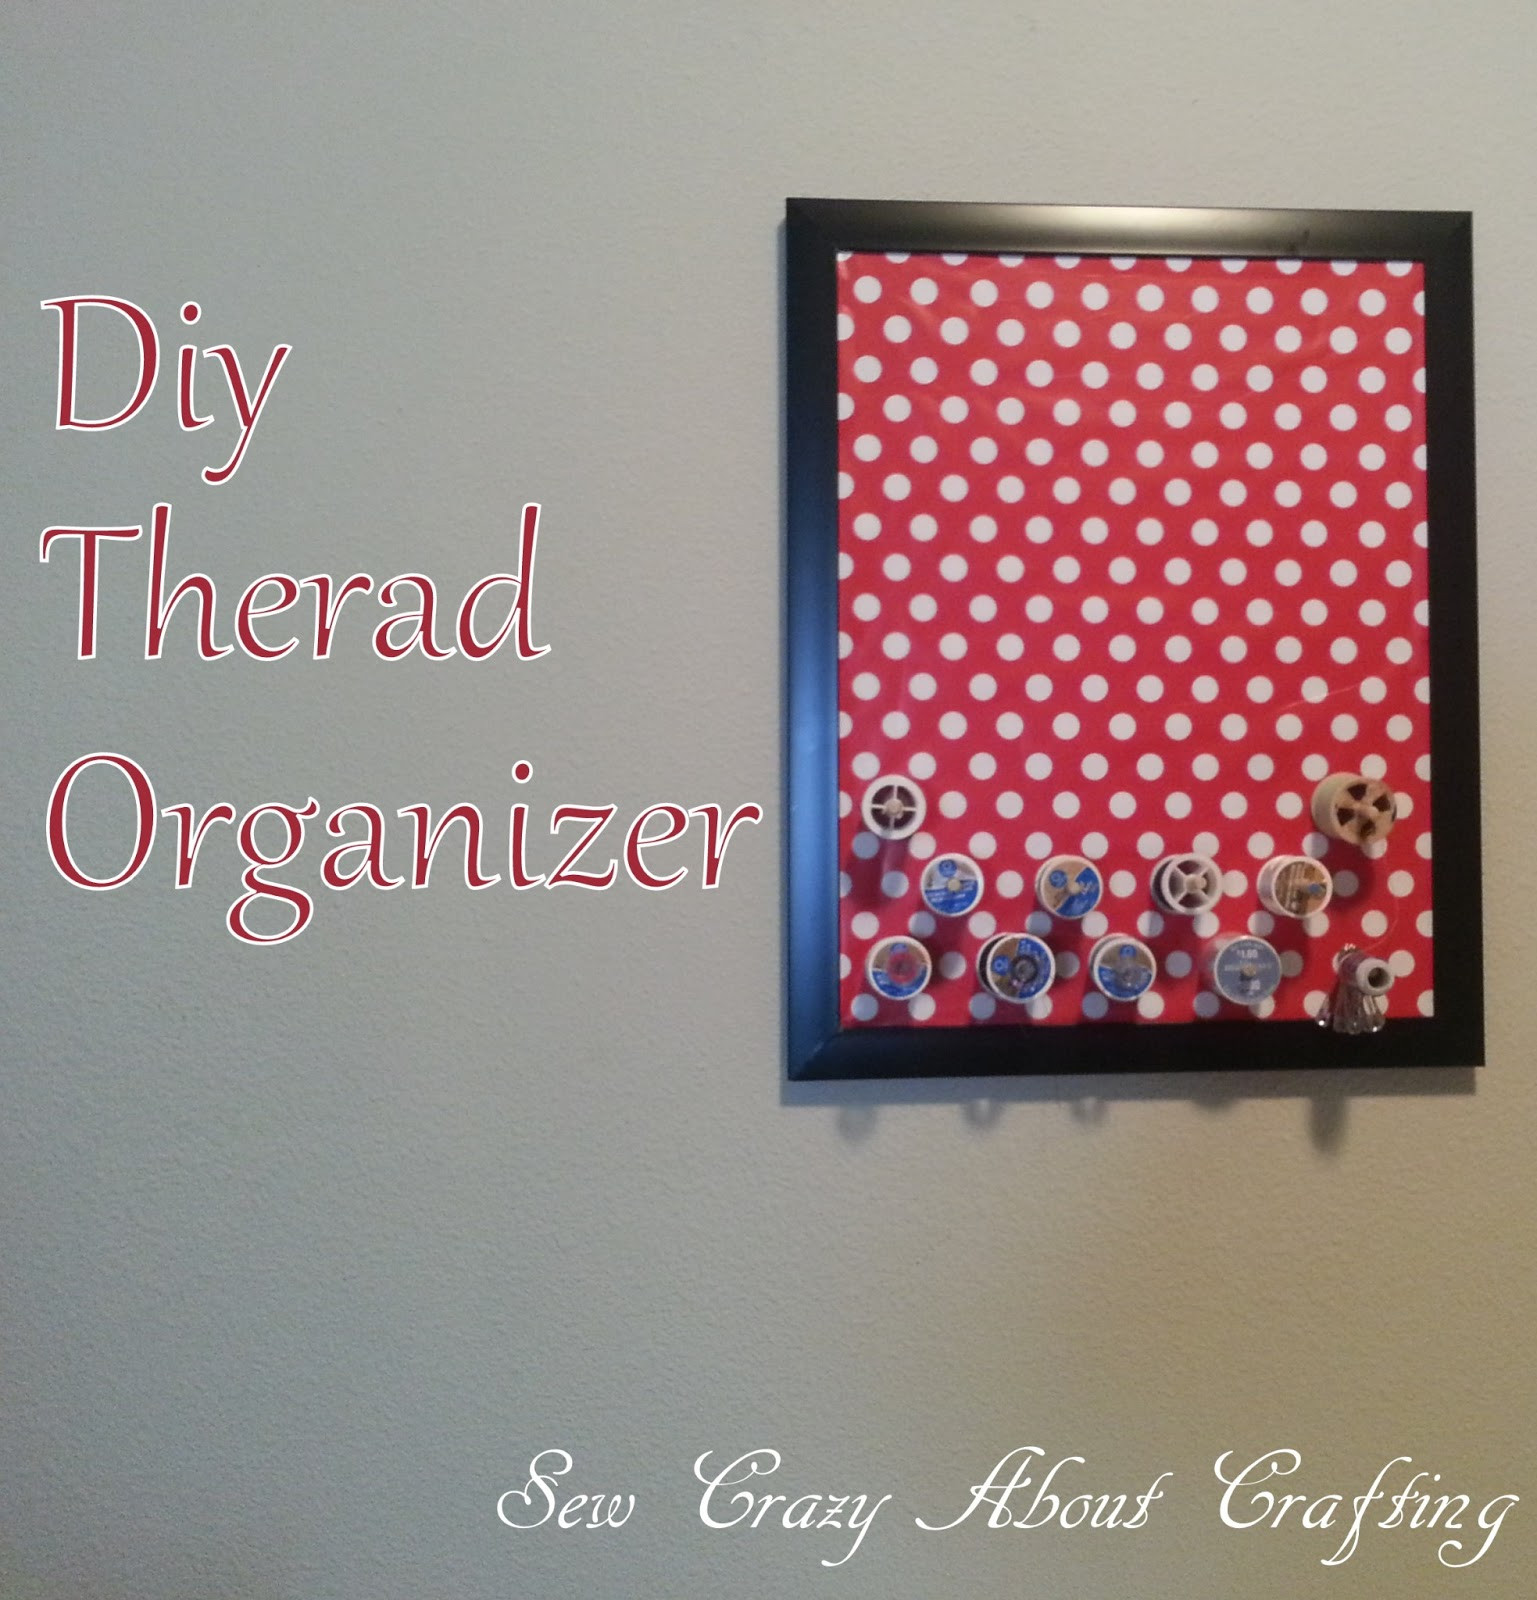 Best ideas about DIY Thread Organizer
. Save or Pin Sew Crazy About Crafting DIY Thread Organizer Now.